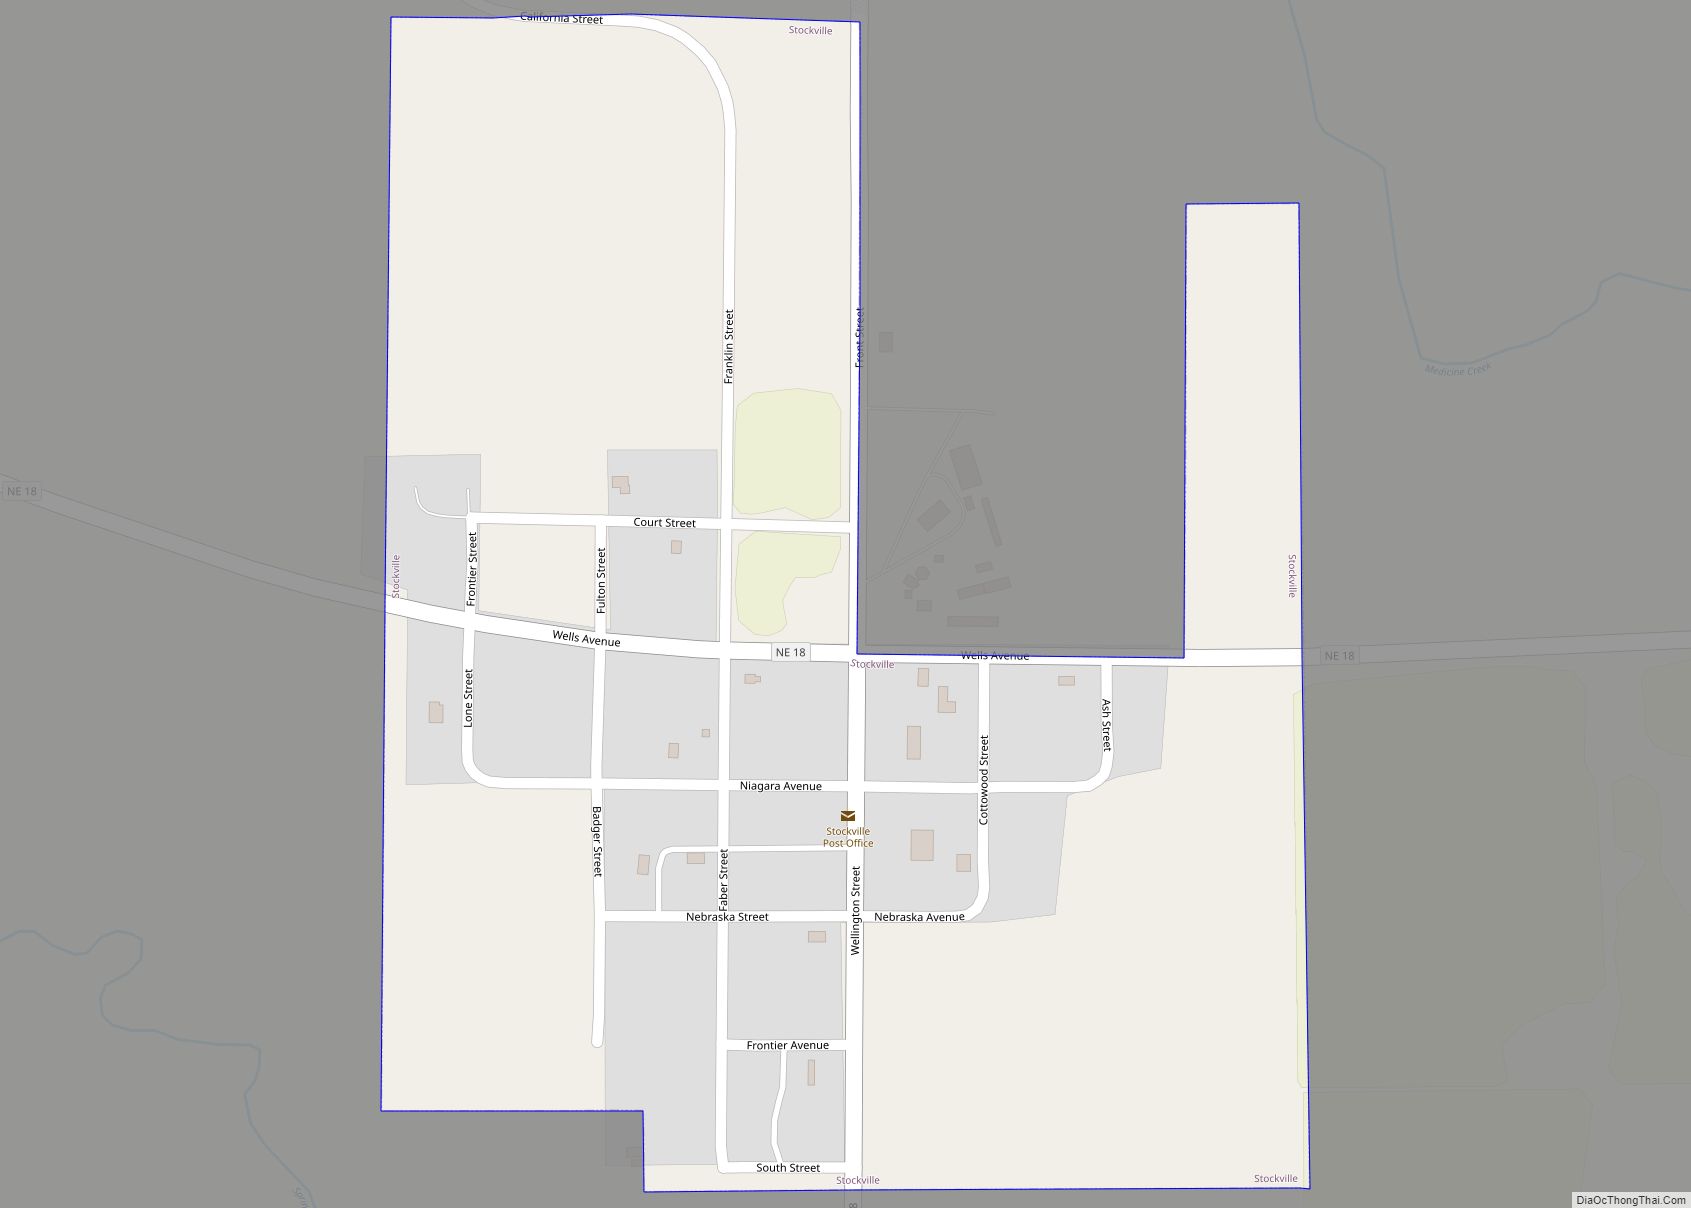 Map of Stockville village